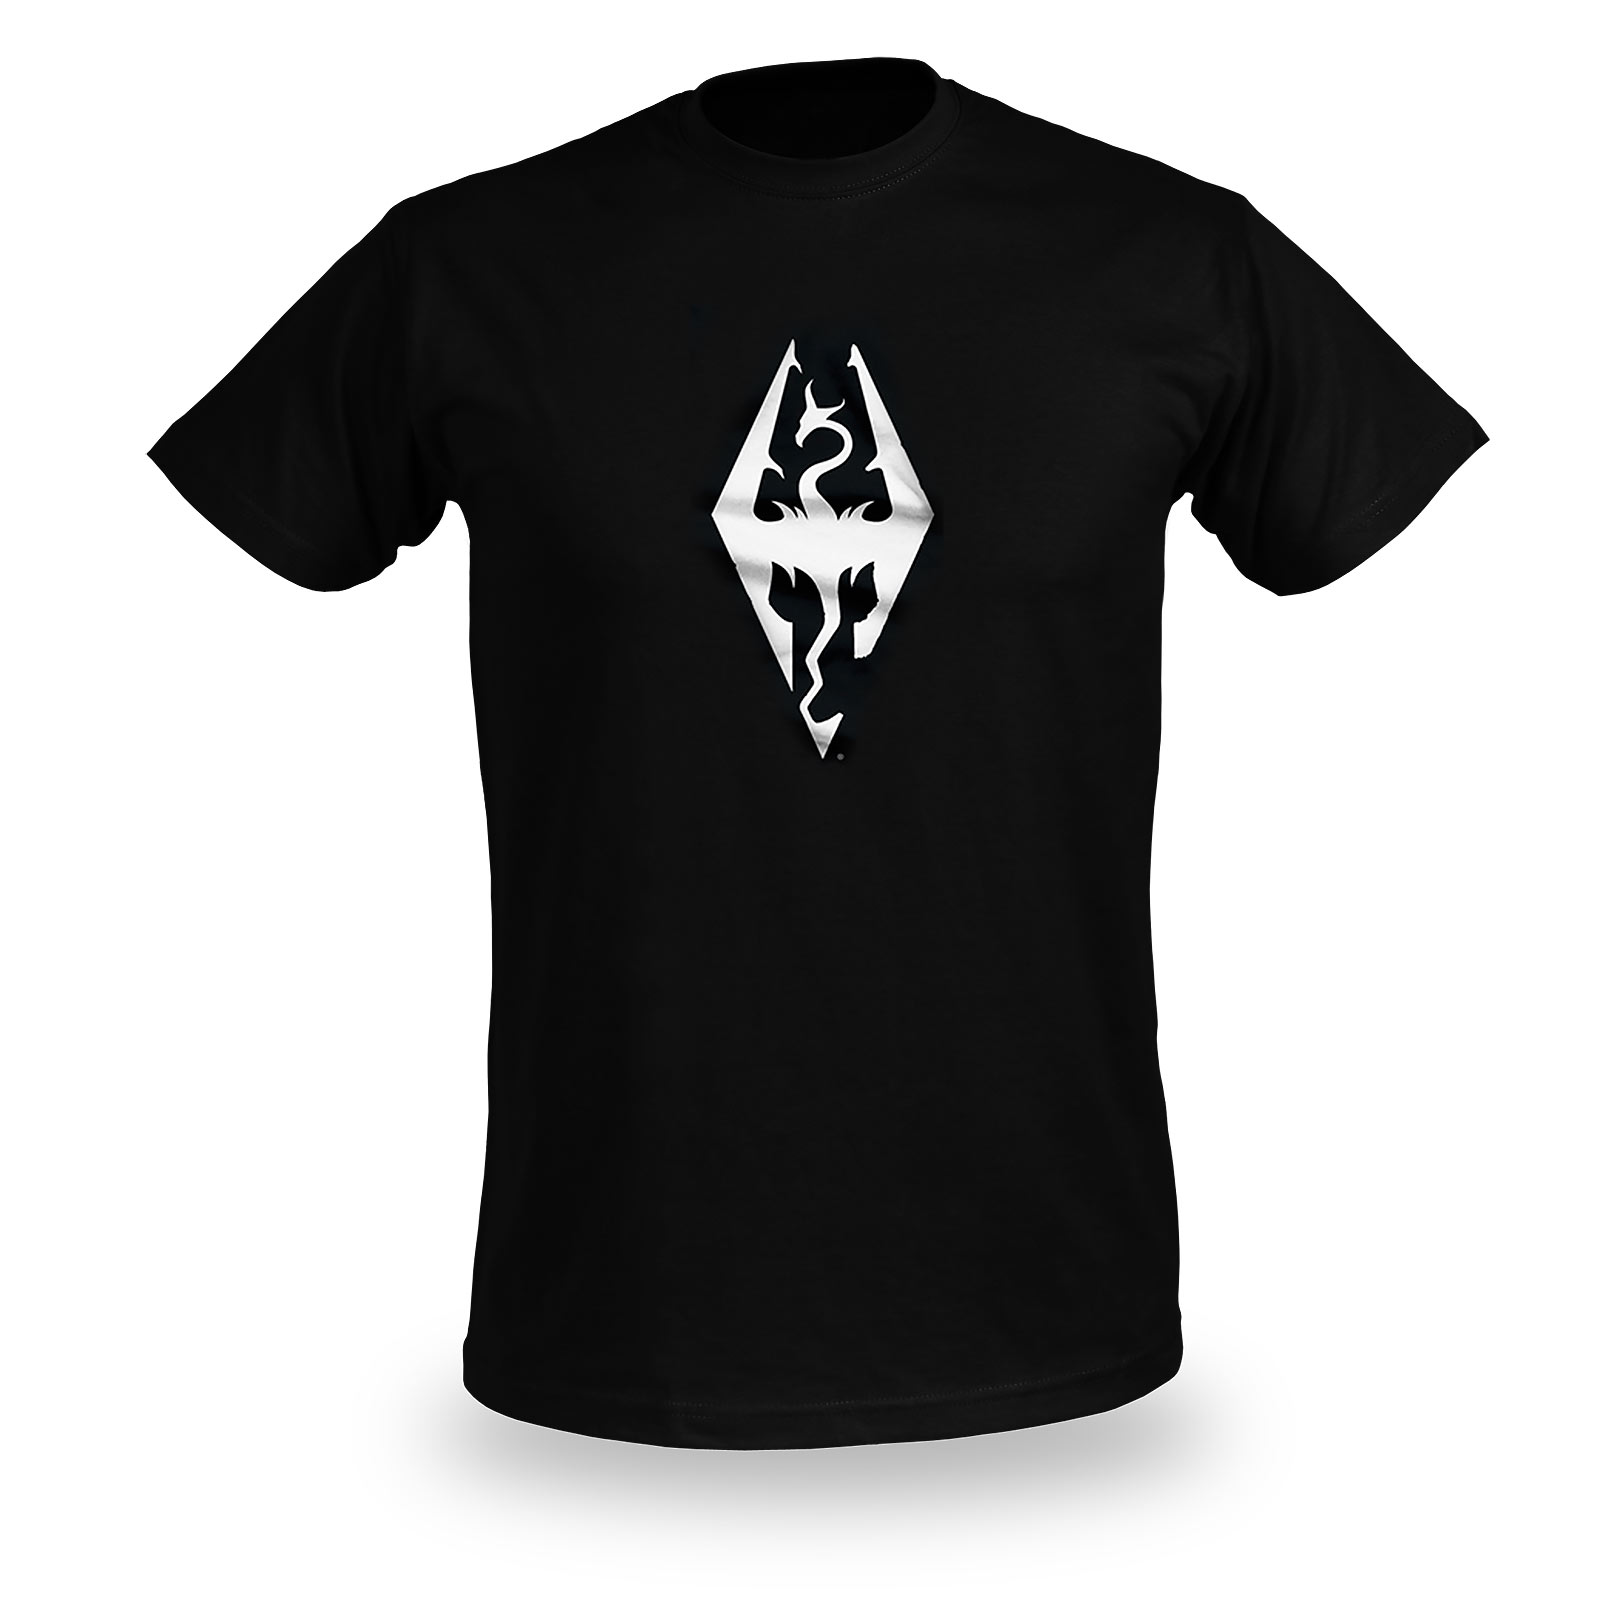 Skyrim - T-shirt noir avec symbole de dragon